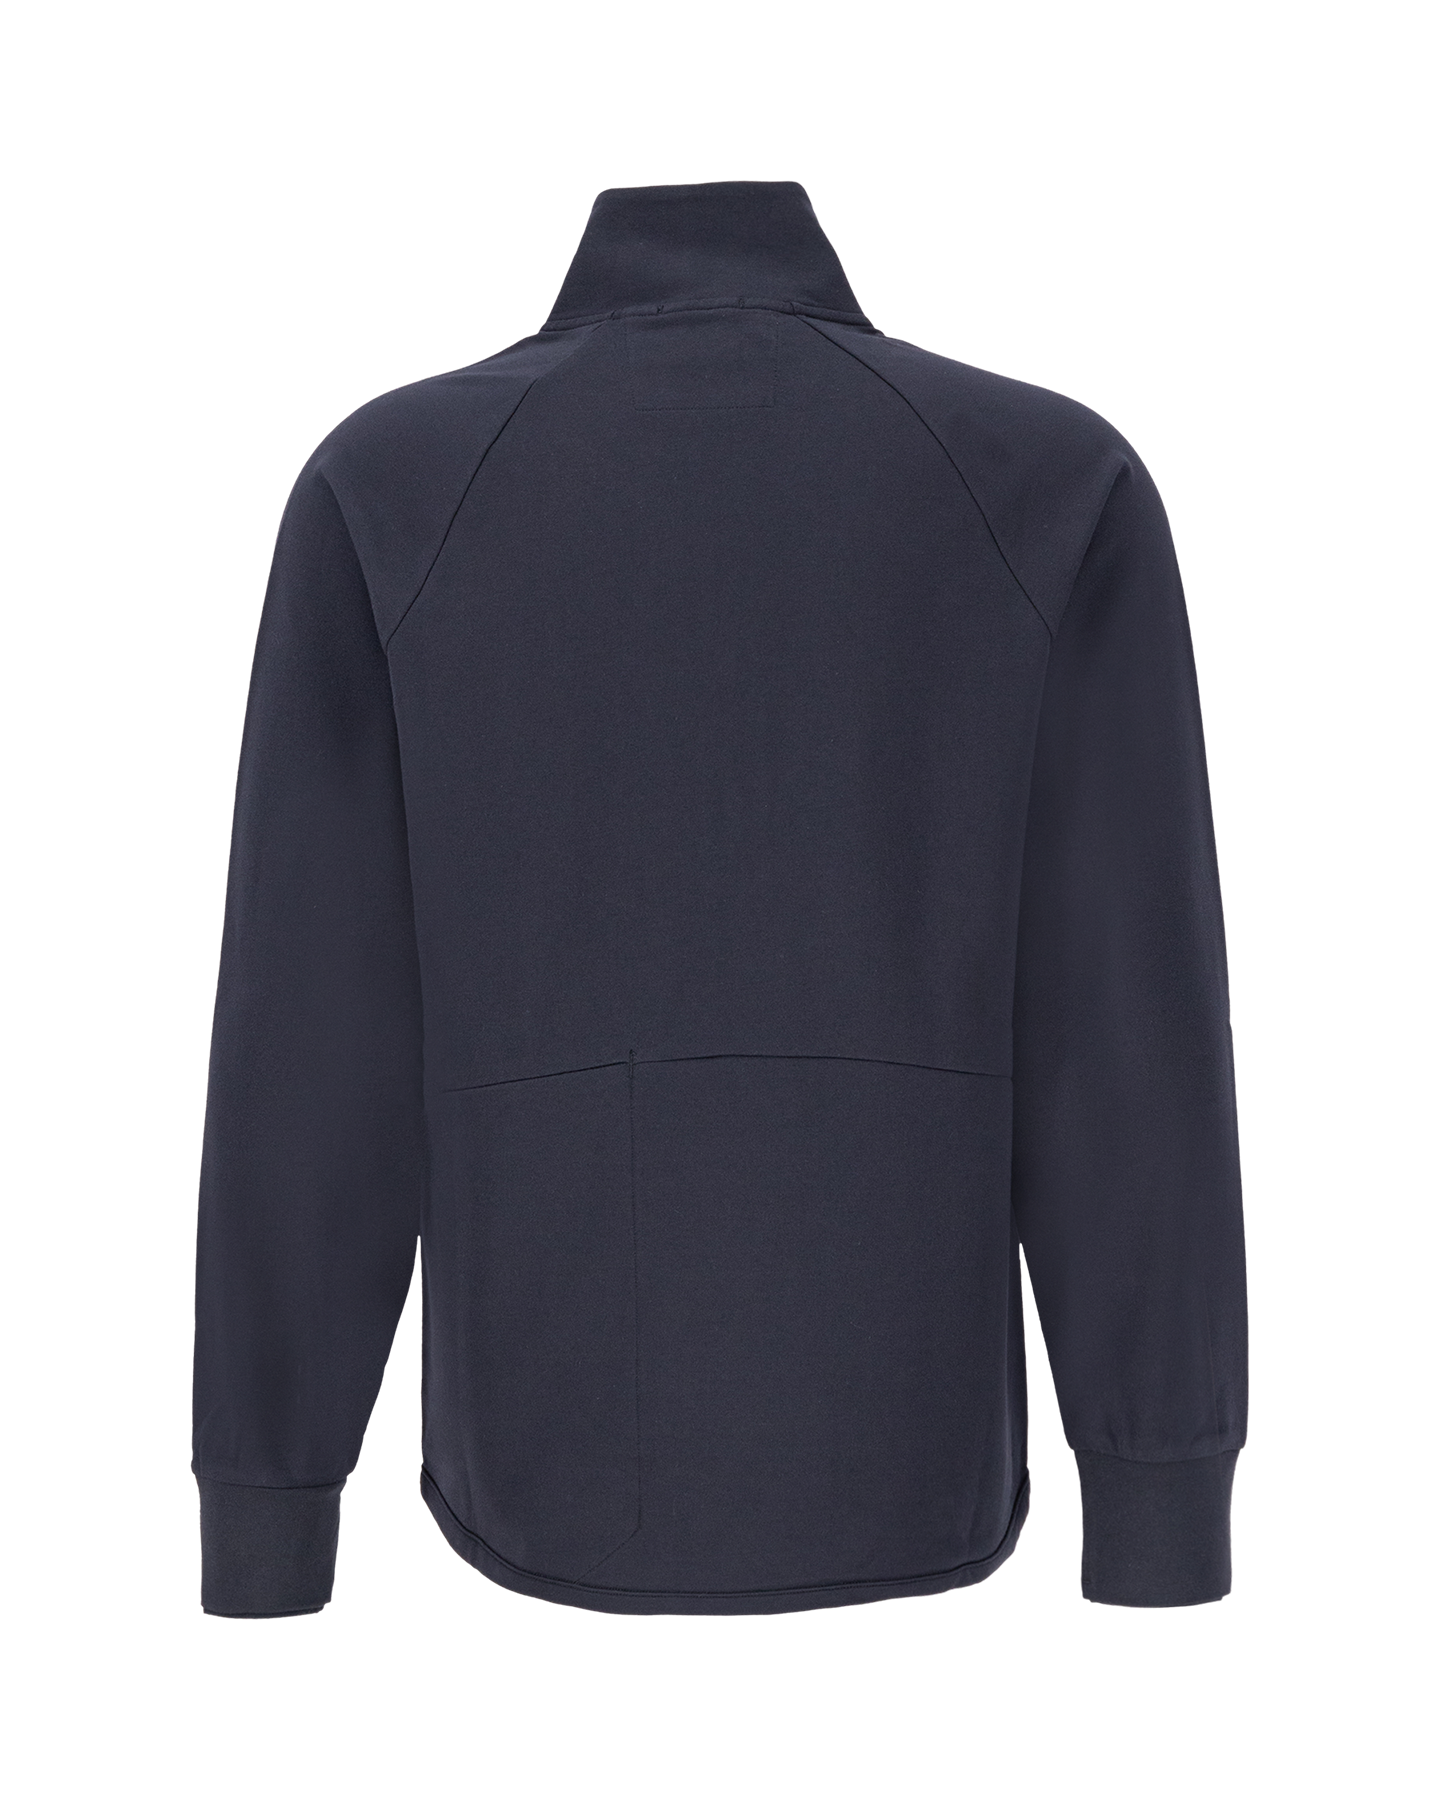 C.P. Company Metropolis Stretch Fleece Zipped Sweatshirt NAVY 2